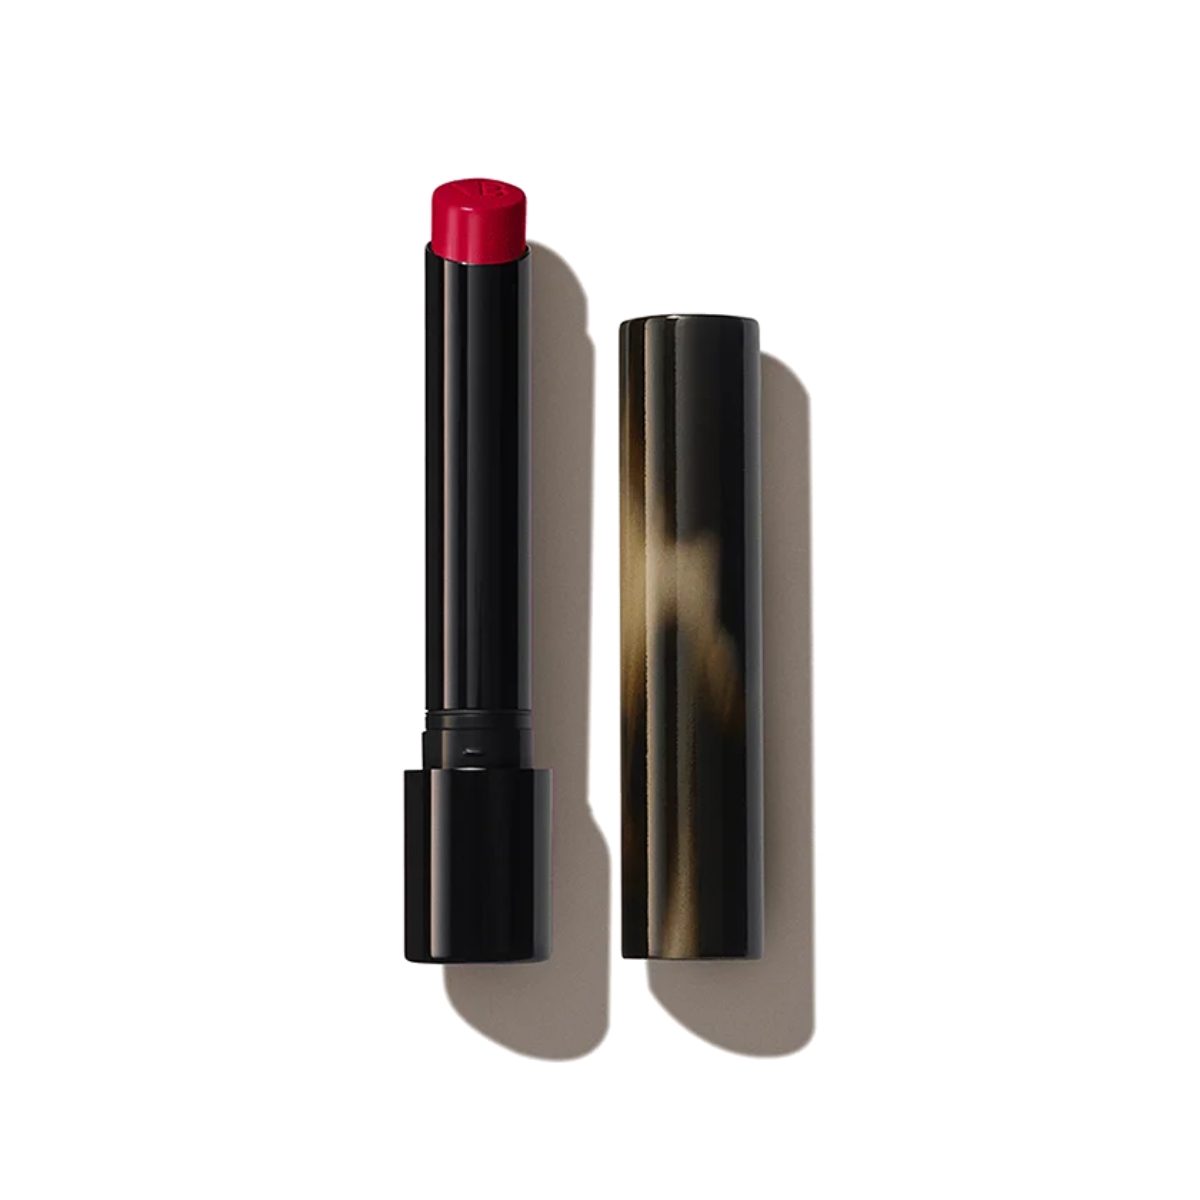 Victoria Beckham Beauty Posh Lipstick in Pop